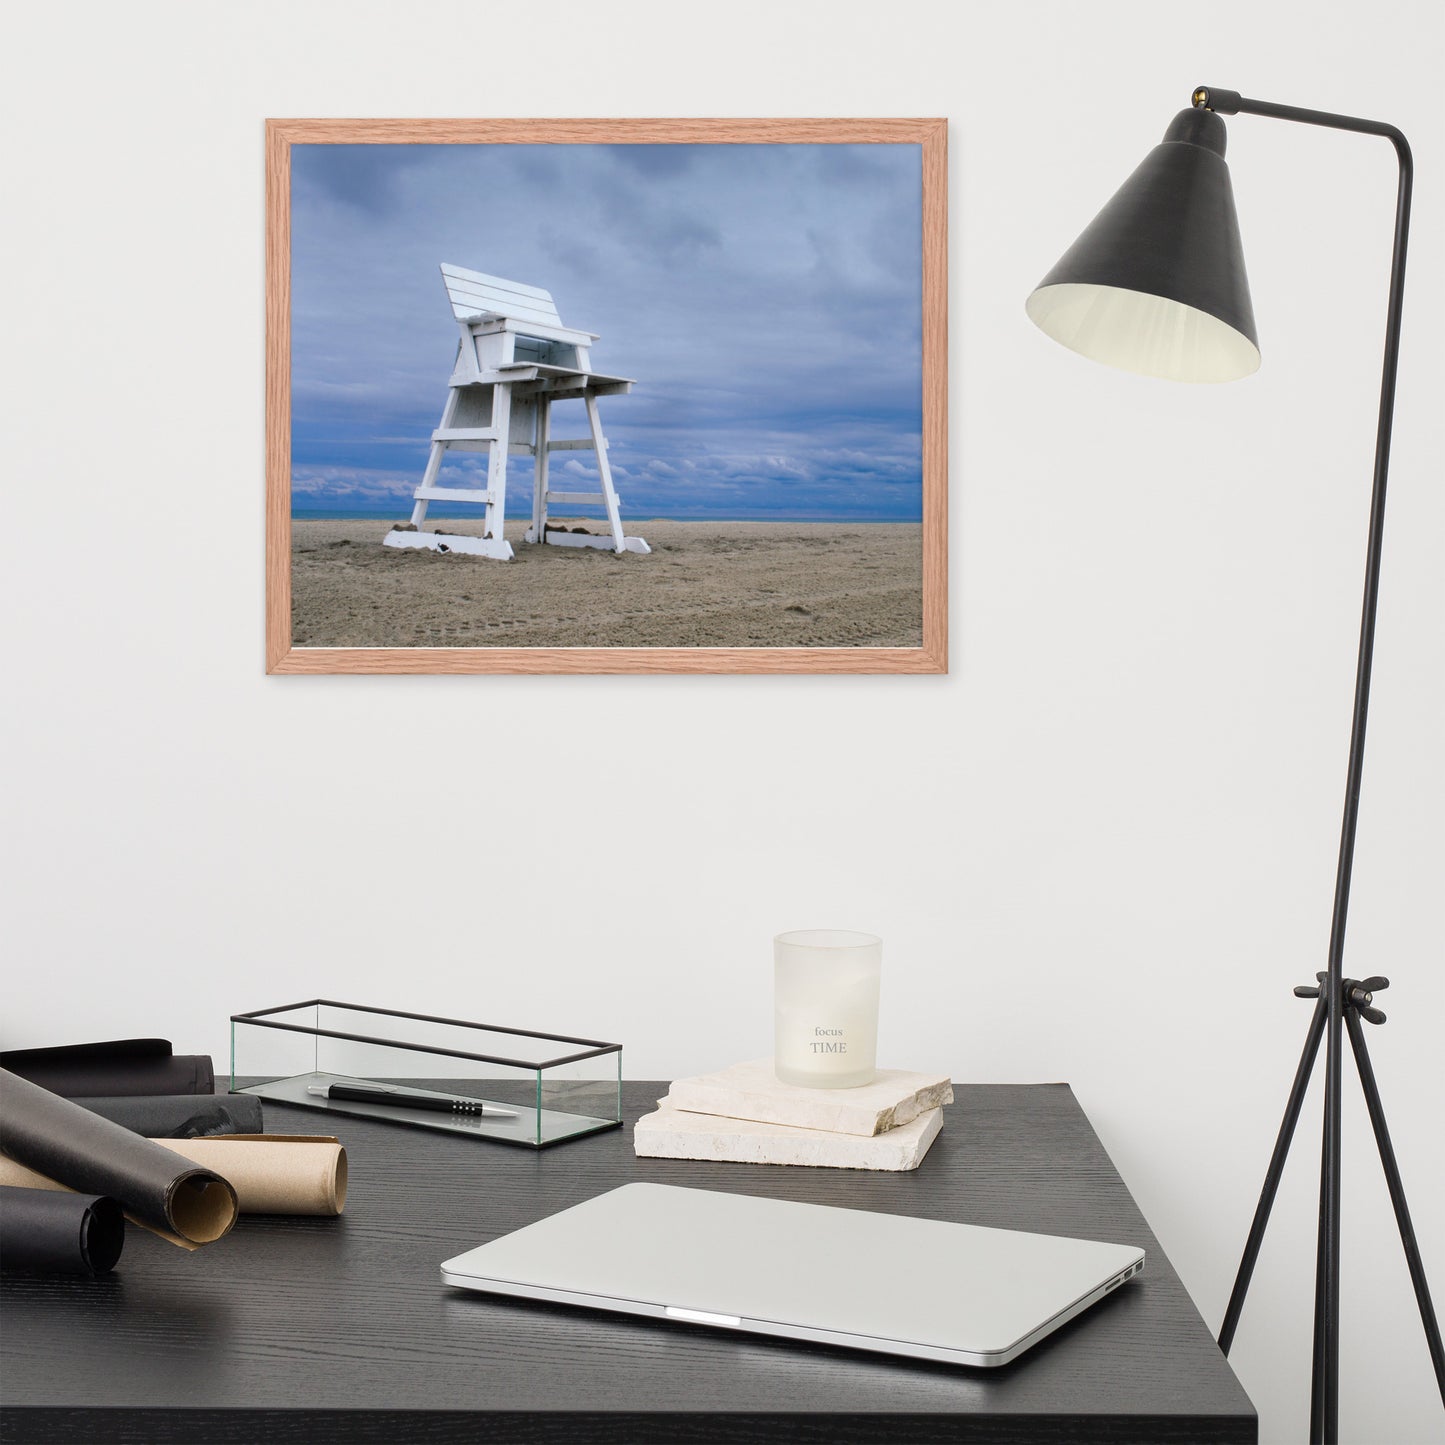 Inspirational Artwork For Office: Approaching Storm - Coastal / Beach / Seascape / Nature / Landscape Photo Framed Wall Art Print - Artwork